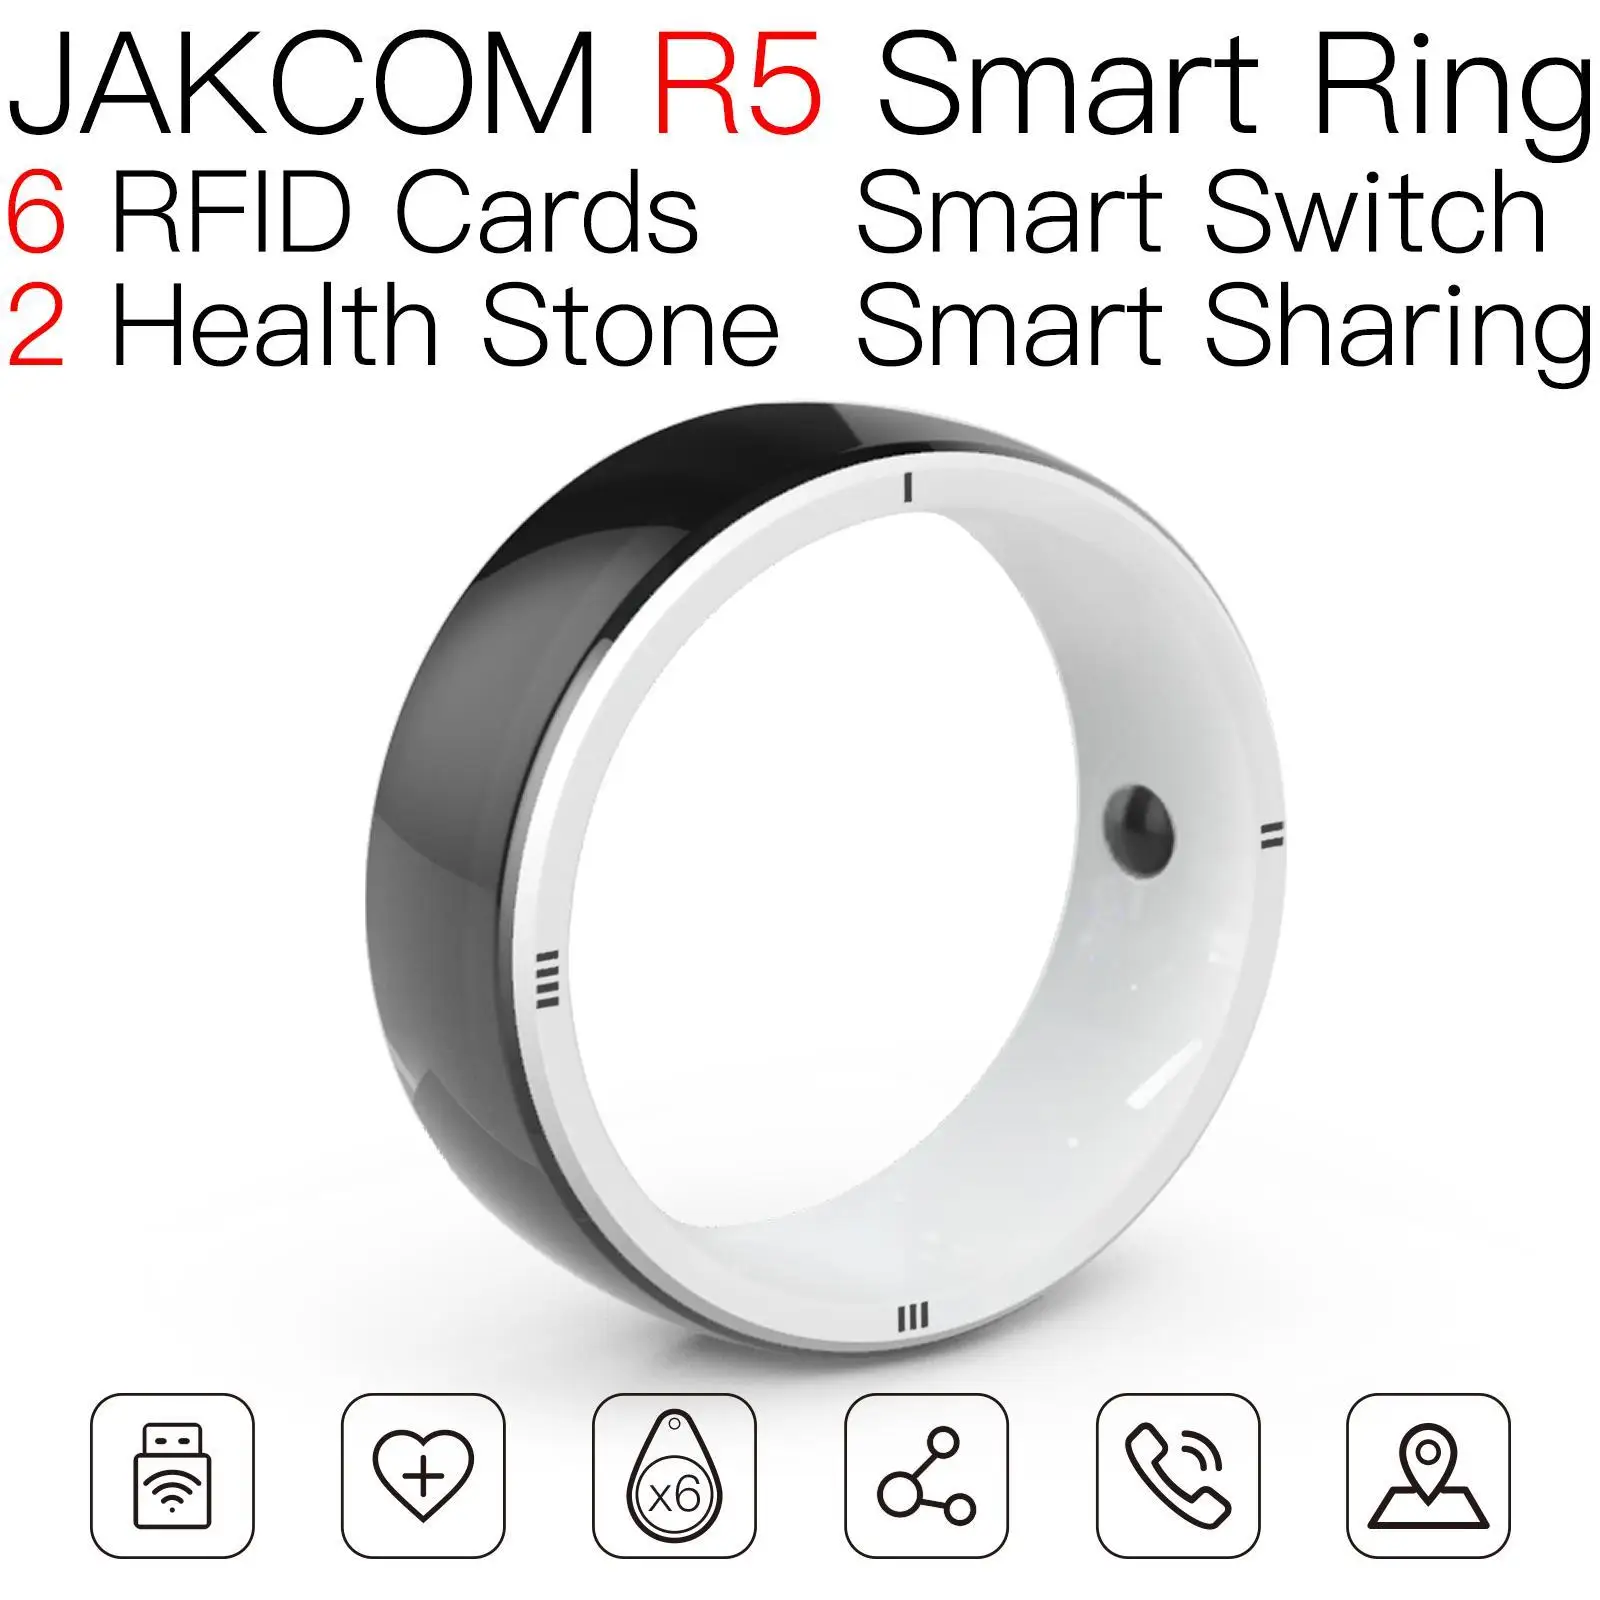 

JAKCOM R5 Smart Ring Super value as nfc chip coin coins em4305 reader communications jammer blocker em4100 1000pcs rfid long